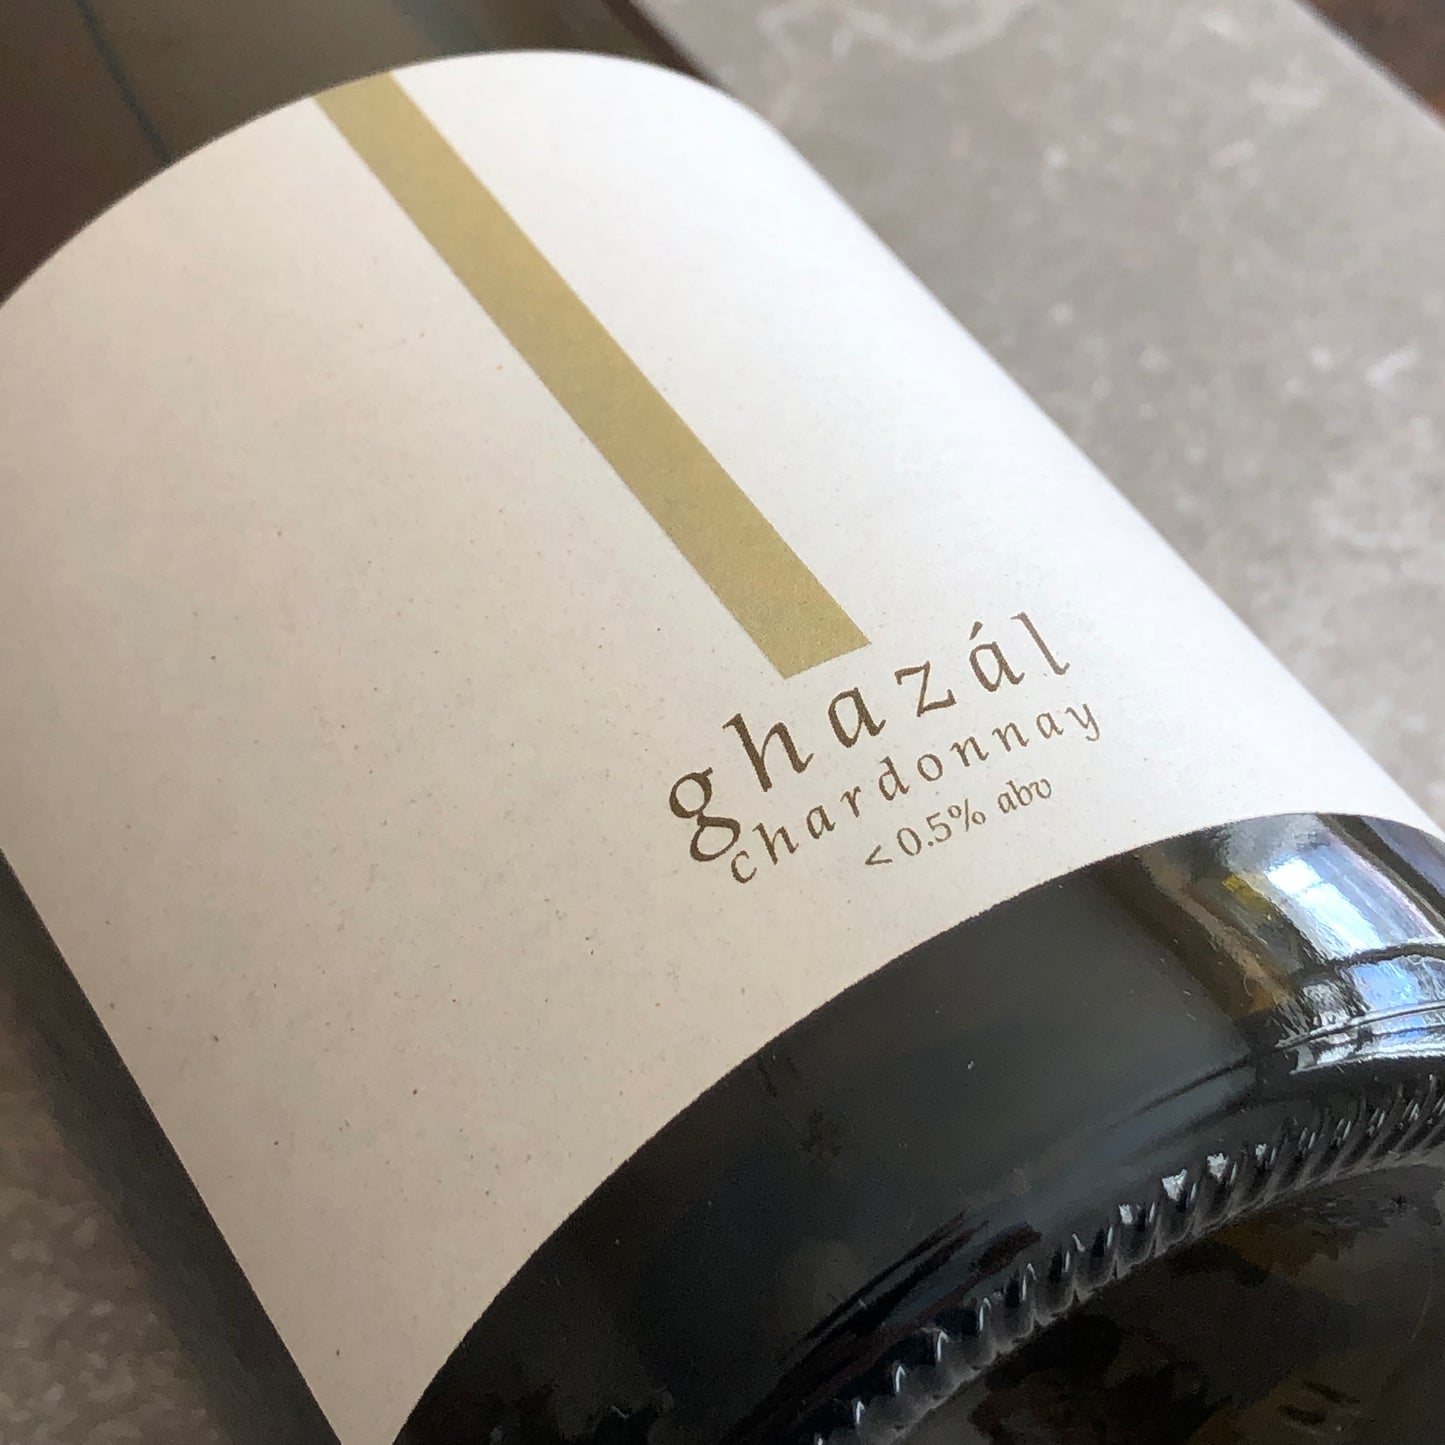 ghazal 0% chardonnay white wine alternative